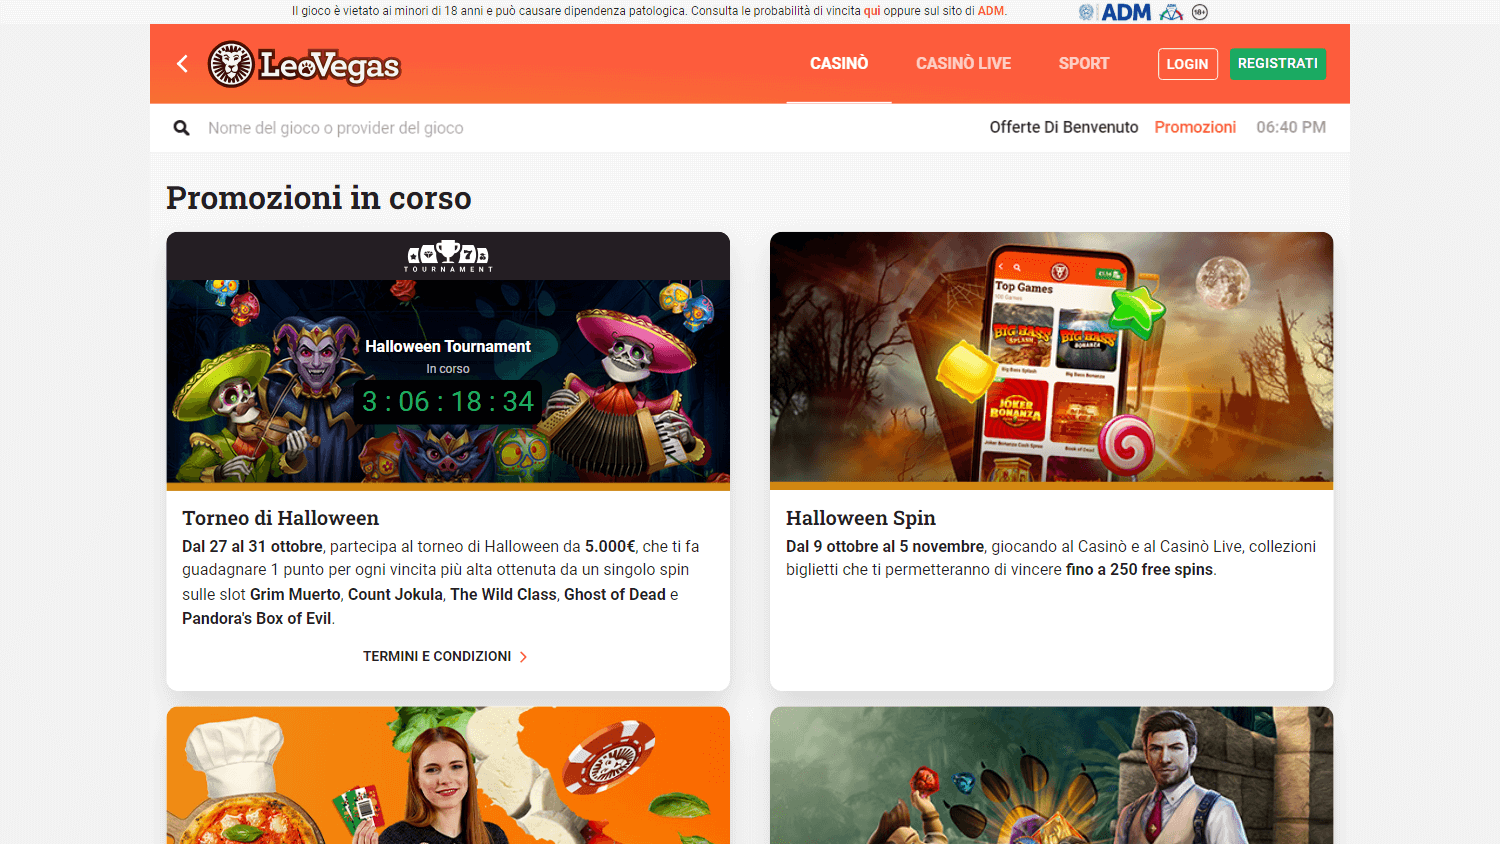 leovegas_casino_it_promotions_desktop